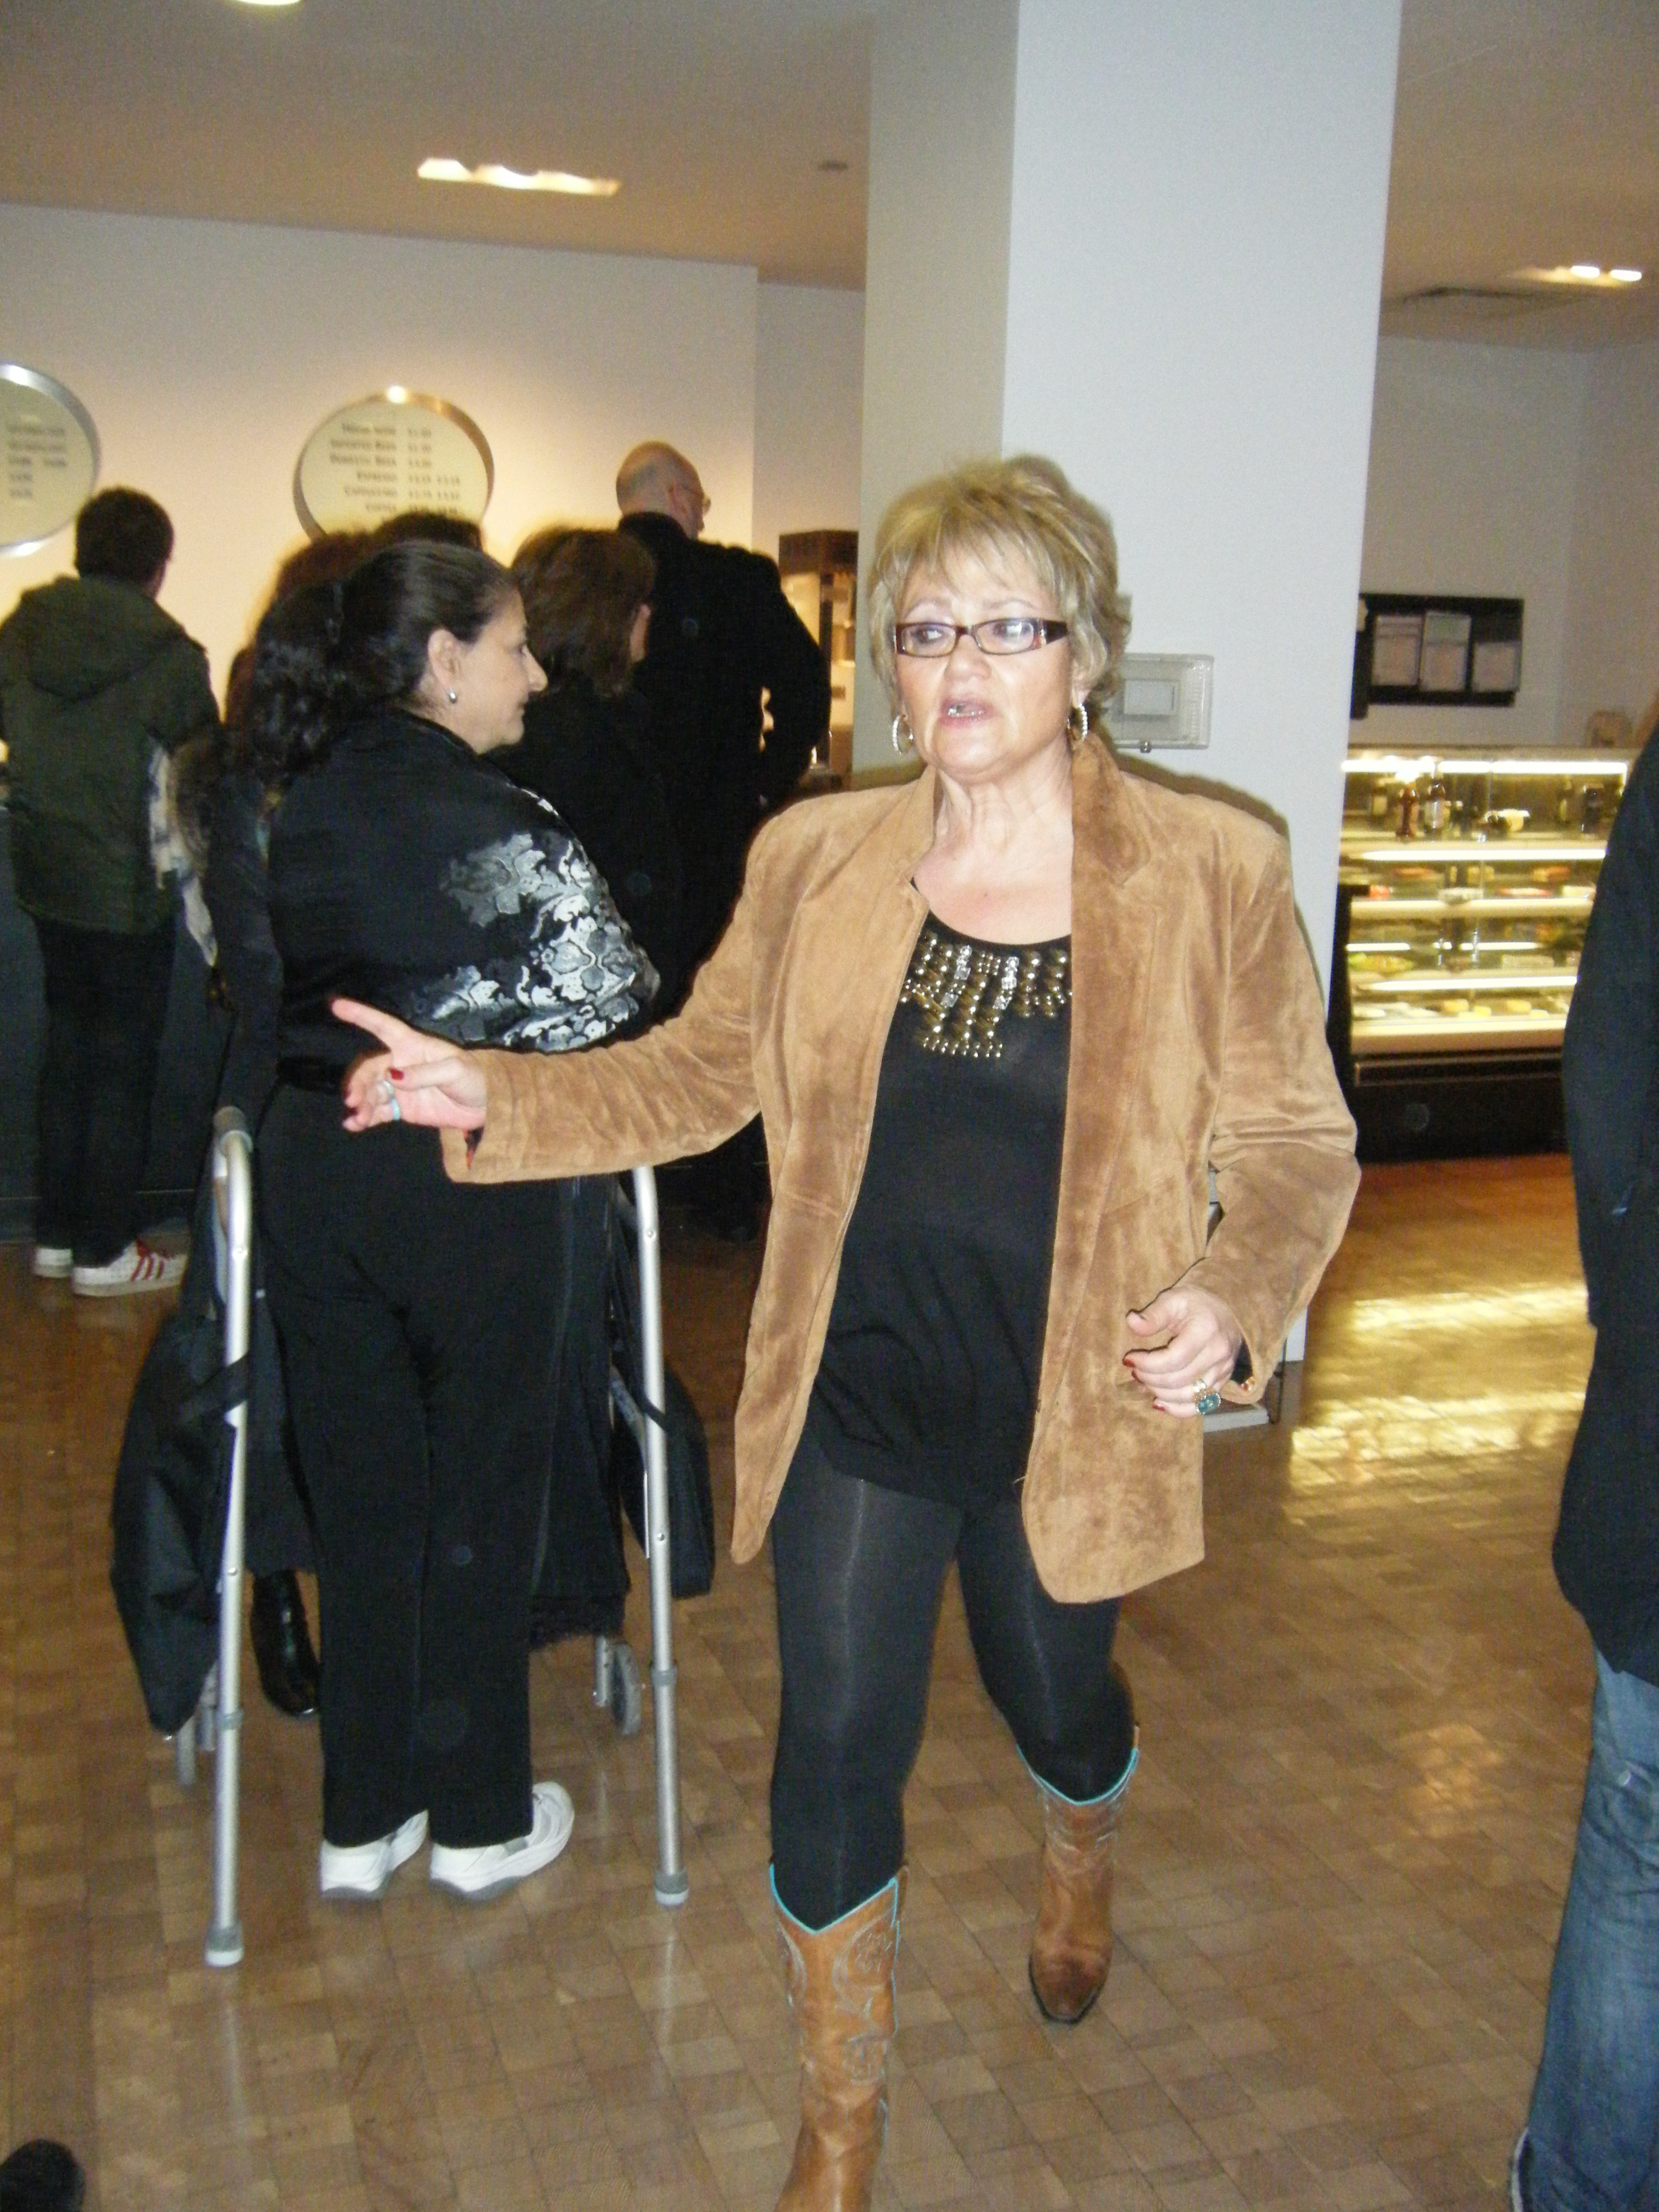 Producer/Director of A SICILIAN ODYSSEY, Jenna Maria Constantine at the 'sneak peek' screening, Gene Siskel Film Center, December 20, 2009.